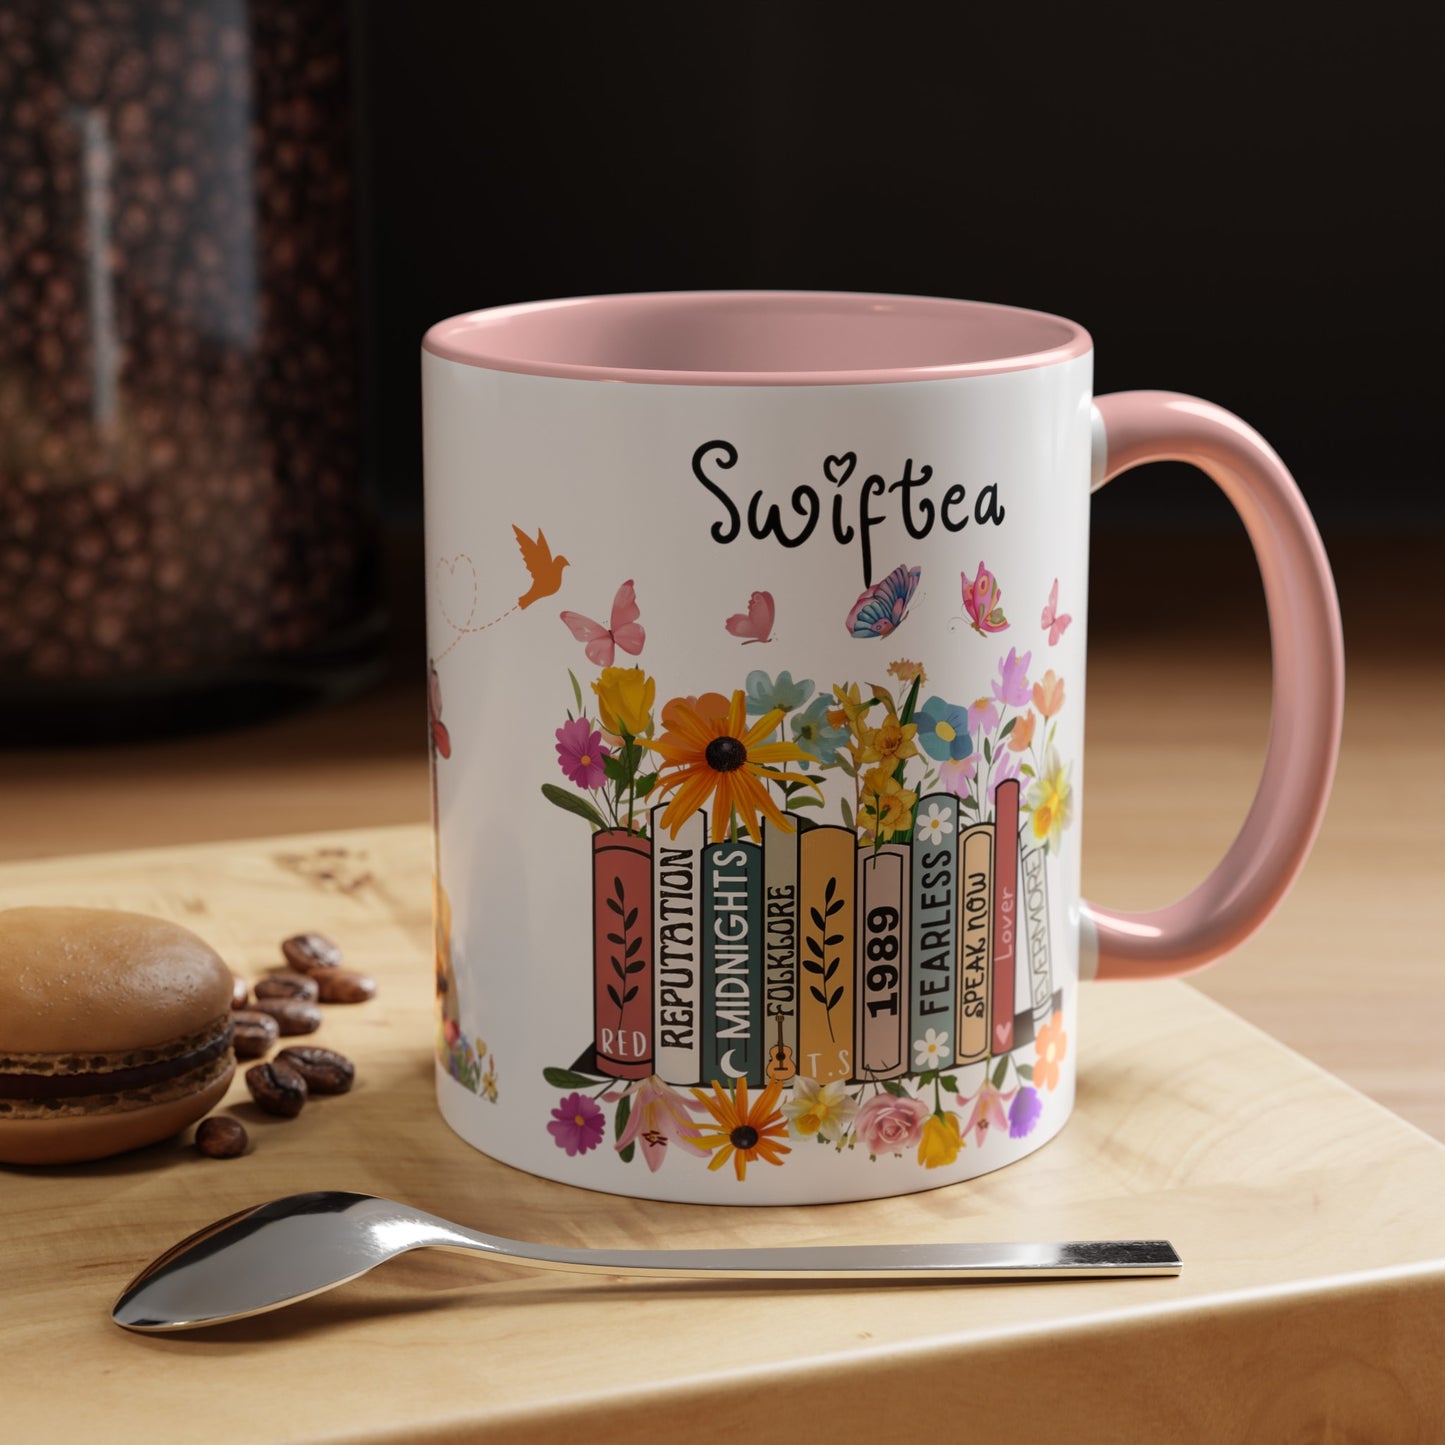 Swiftea Coffee Mug| Swiftie Coffee Cup| Taylor Coffee Cup 11oz| Taylor Mug| Music Album As Books| Swiftie Cup| Girl Fans Merch| Taylor Album